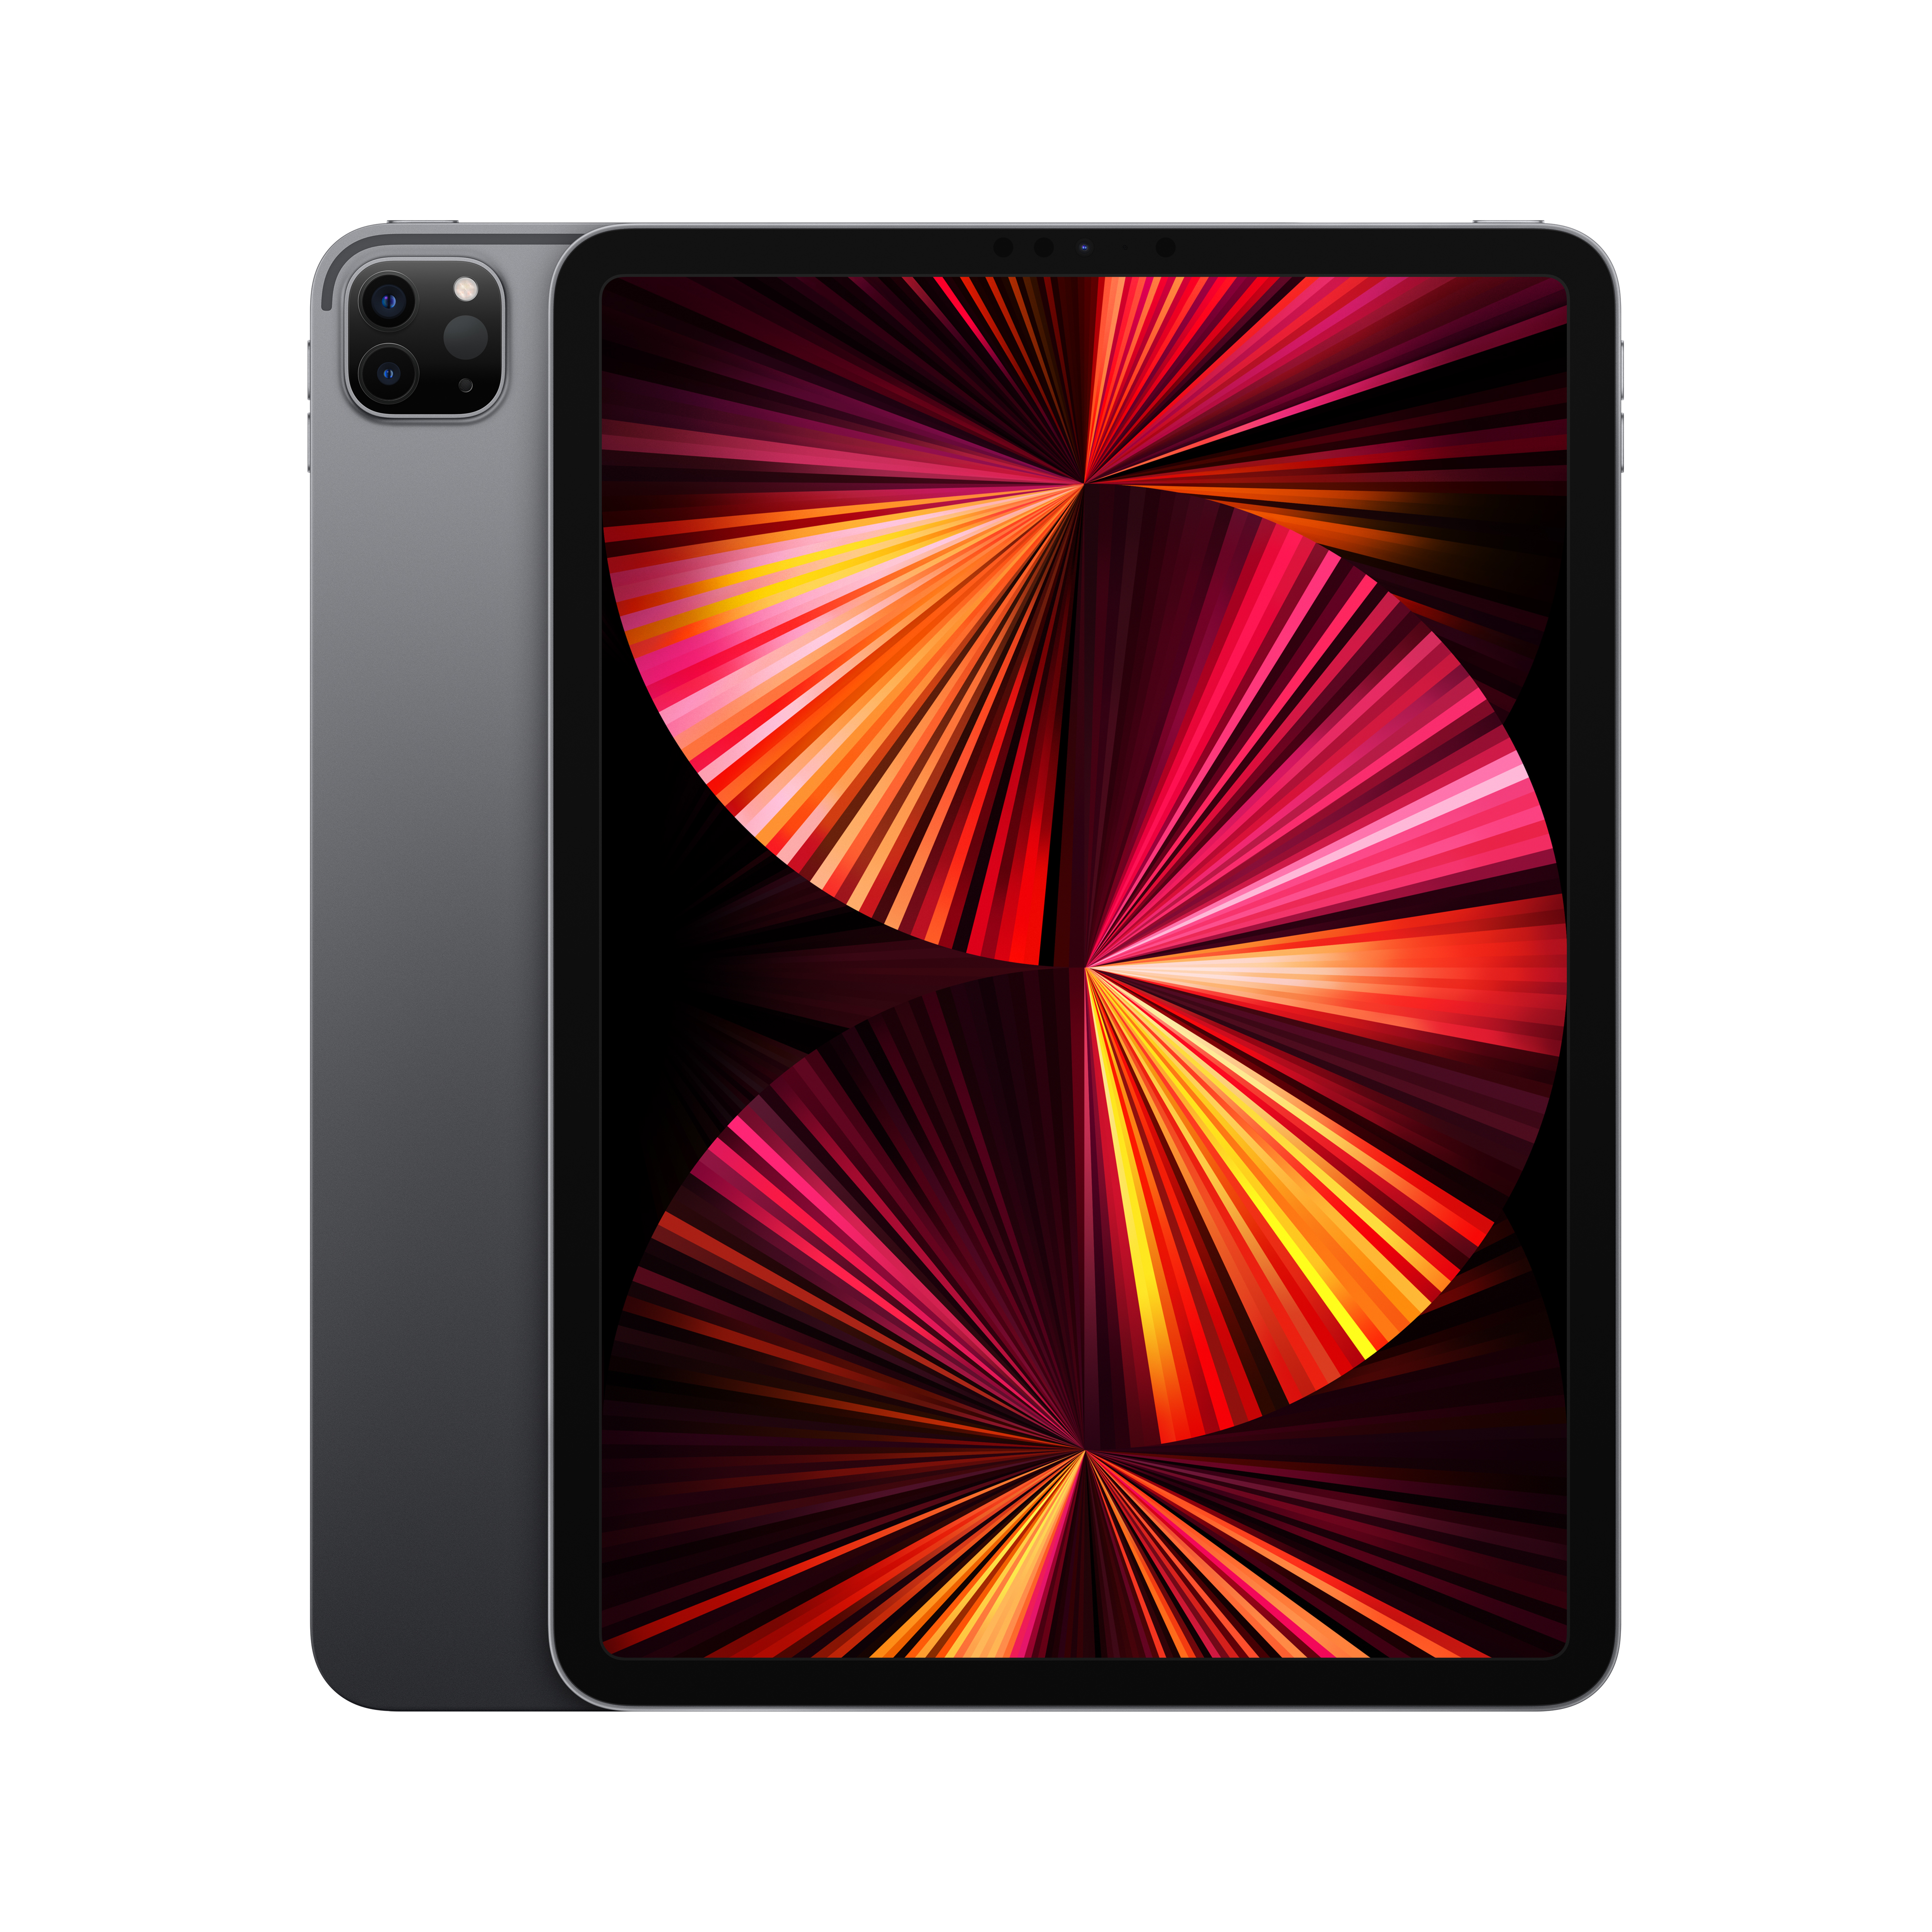 Apple 11-inch iPad Pro (2021) Wi-Fi 256GB - Space Gray - Walmart.com $799